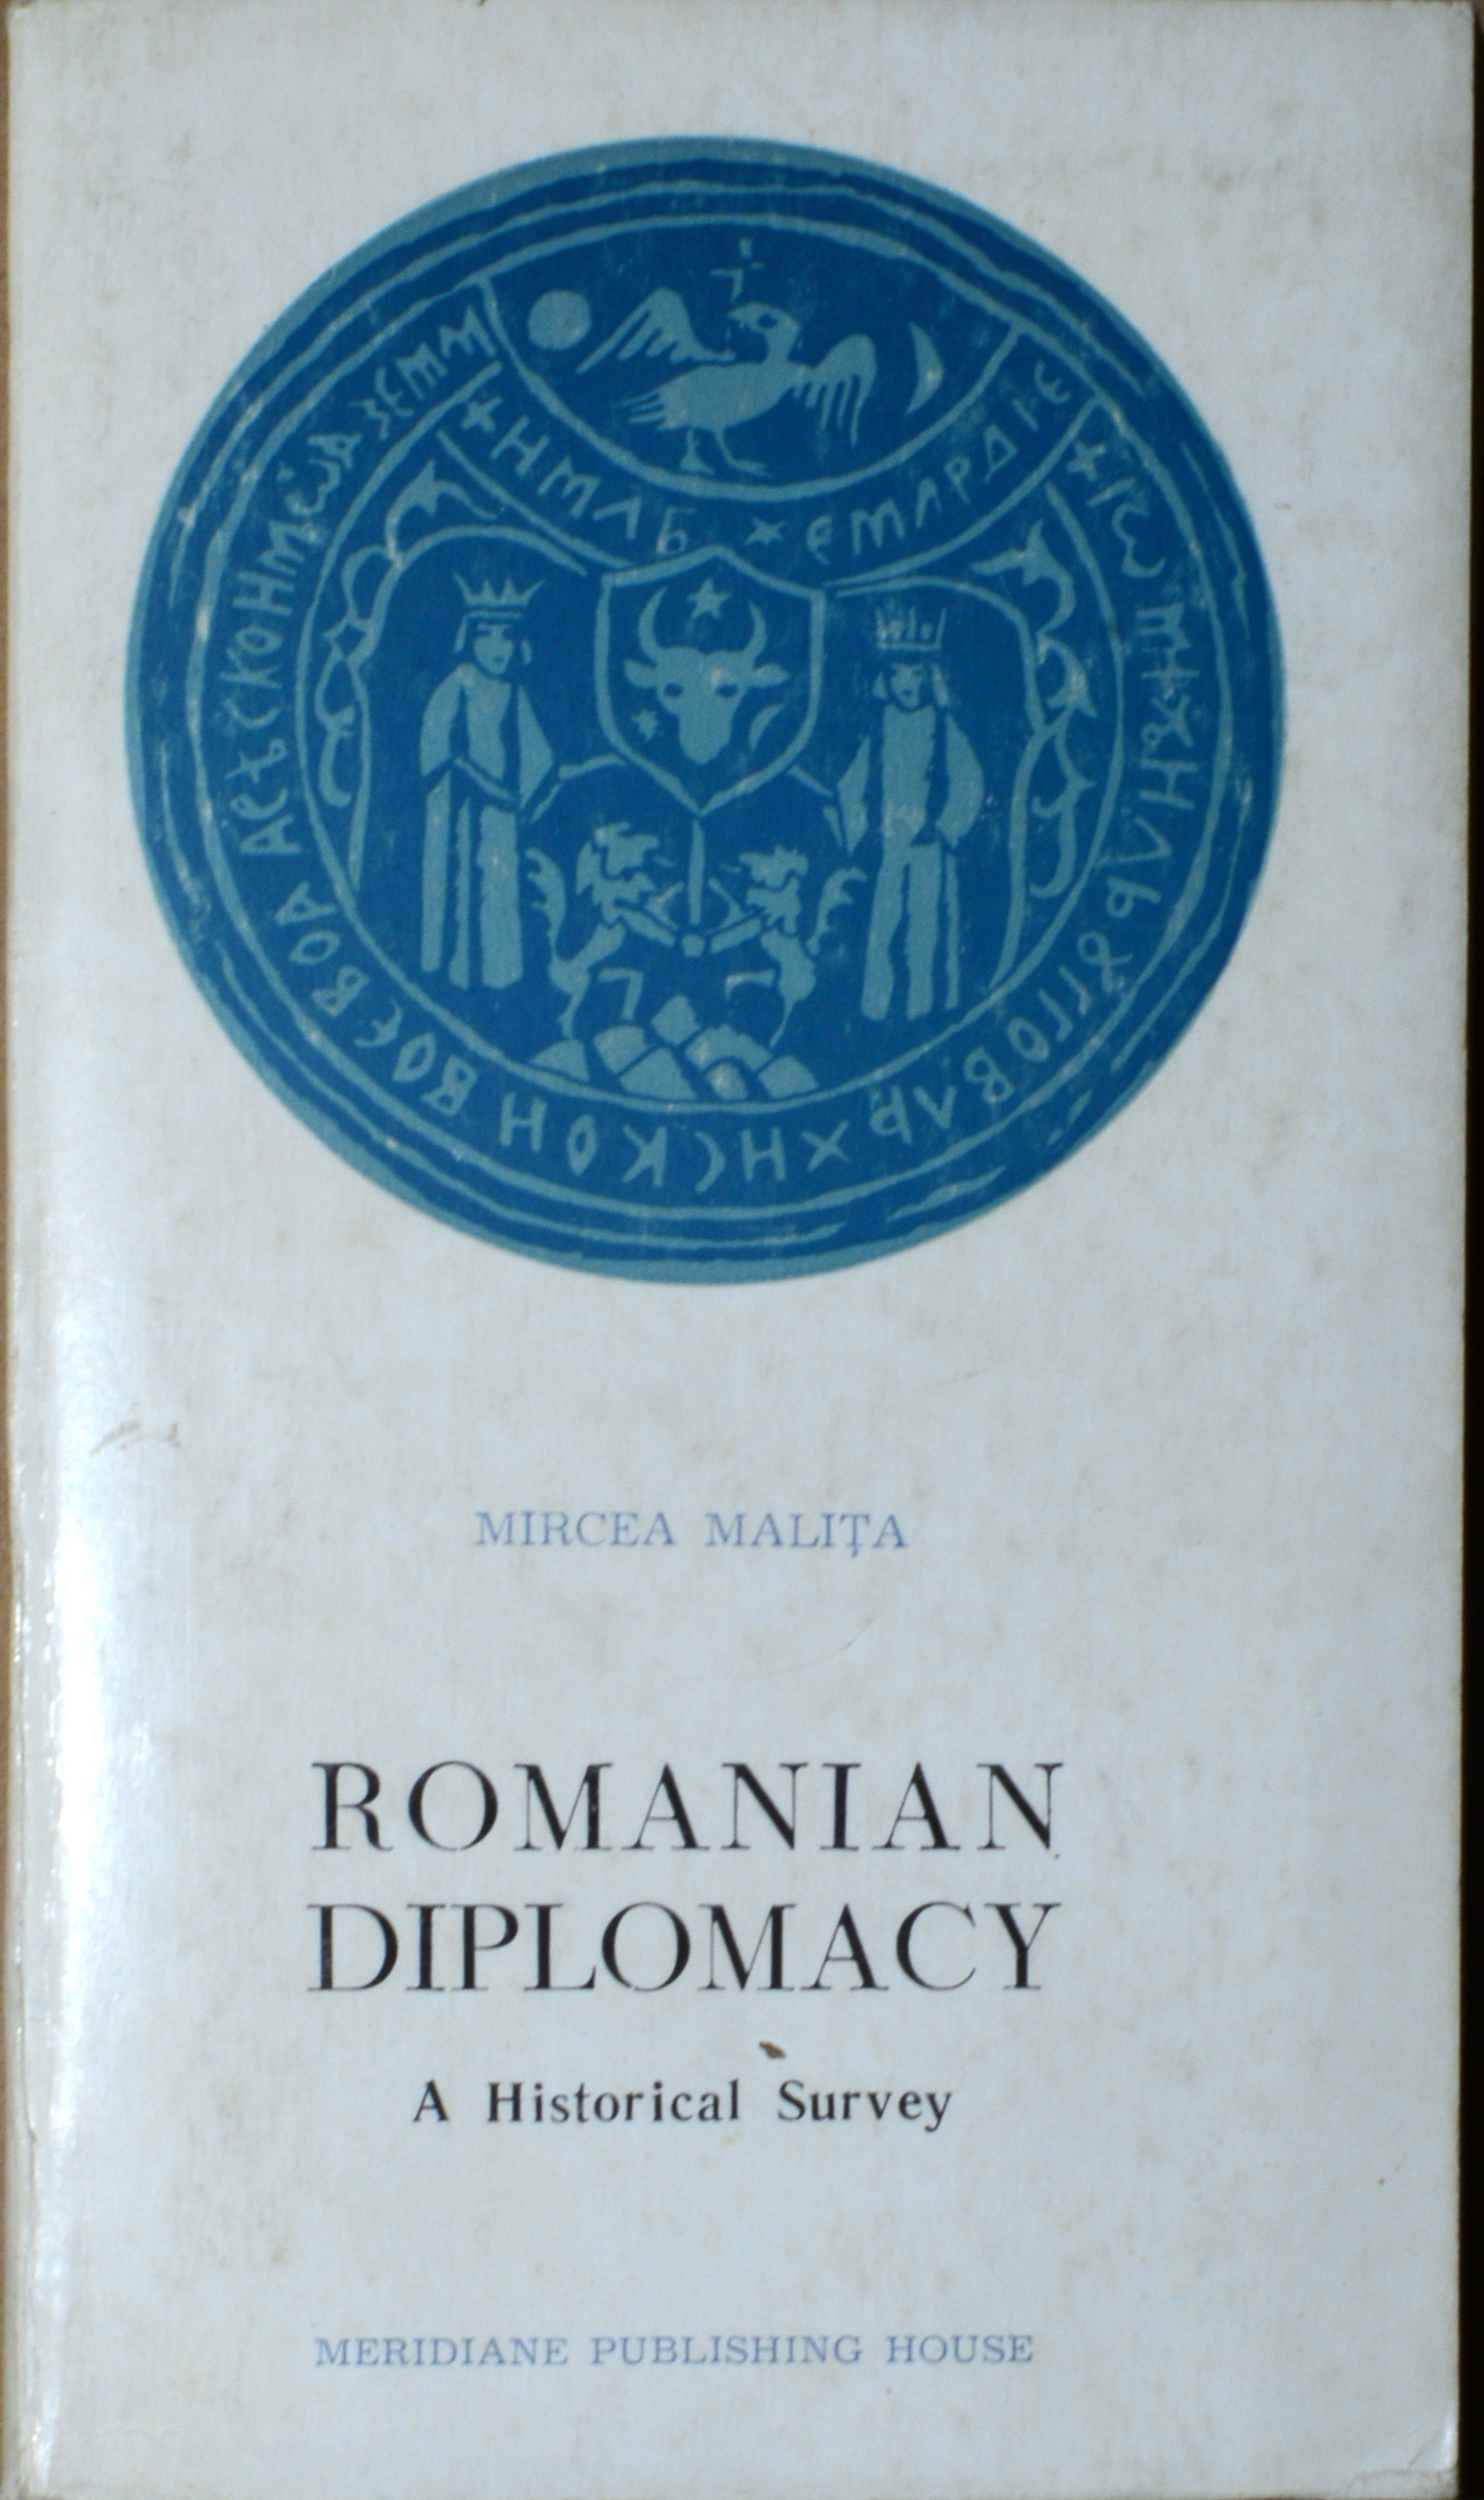 Romanian diplomacy